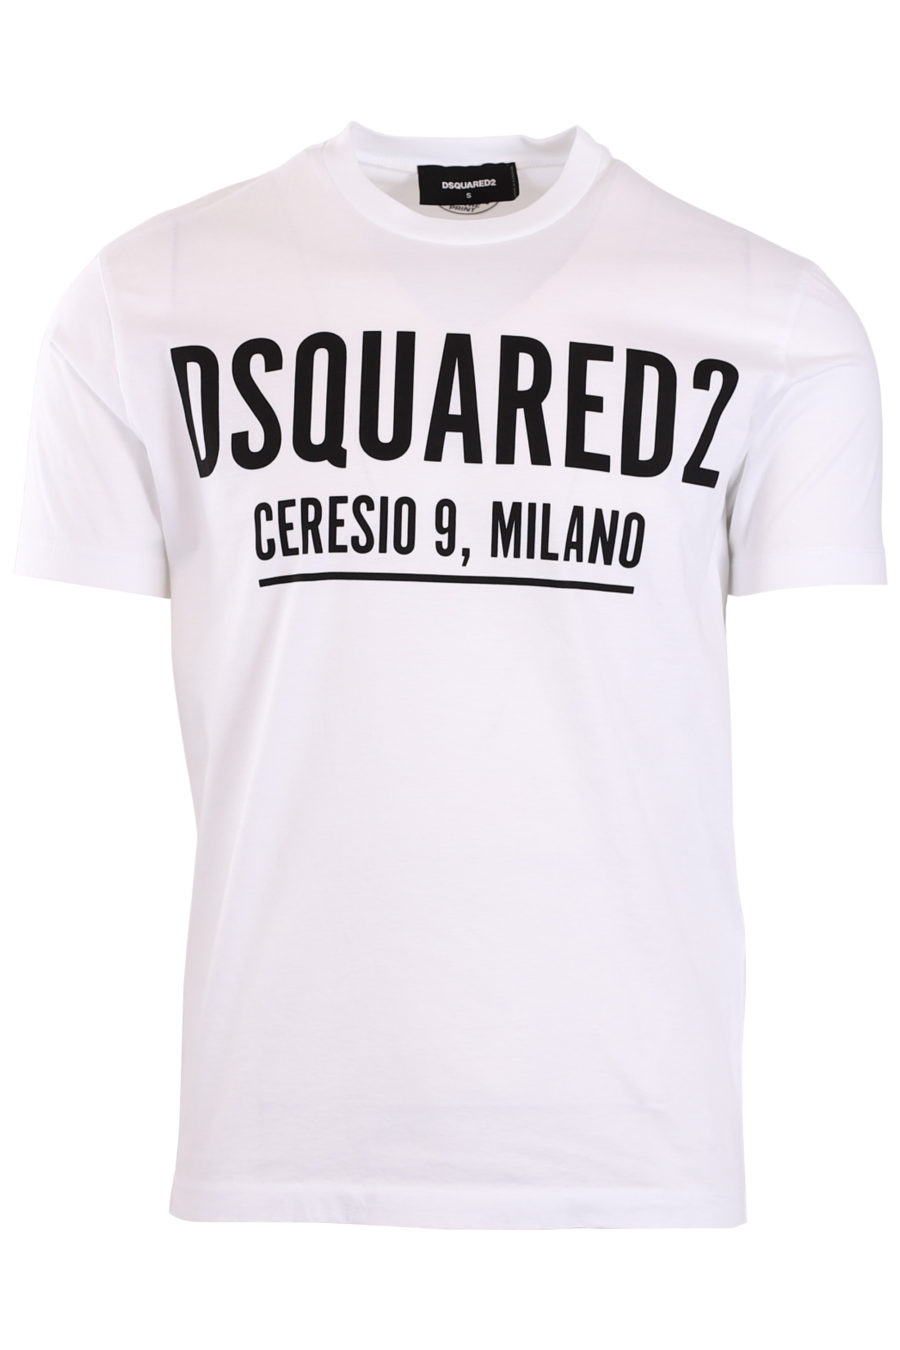 Camiseta blanca con estampado "Ceresio 9 Milano" - d836d9888463fa5e4cfb60c13881410c800abcb7